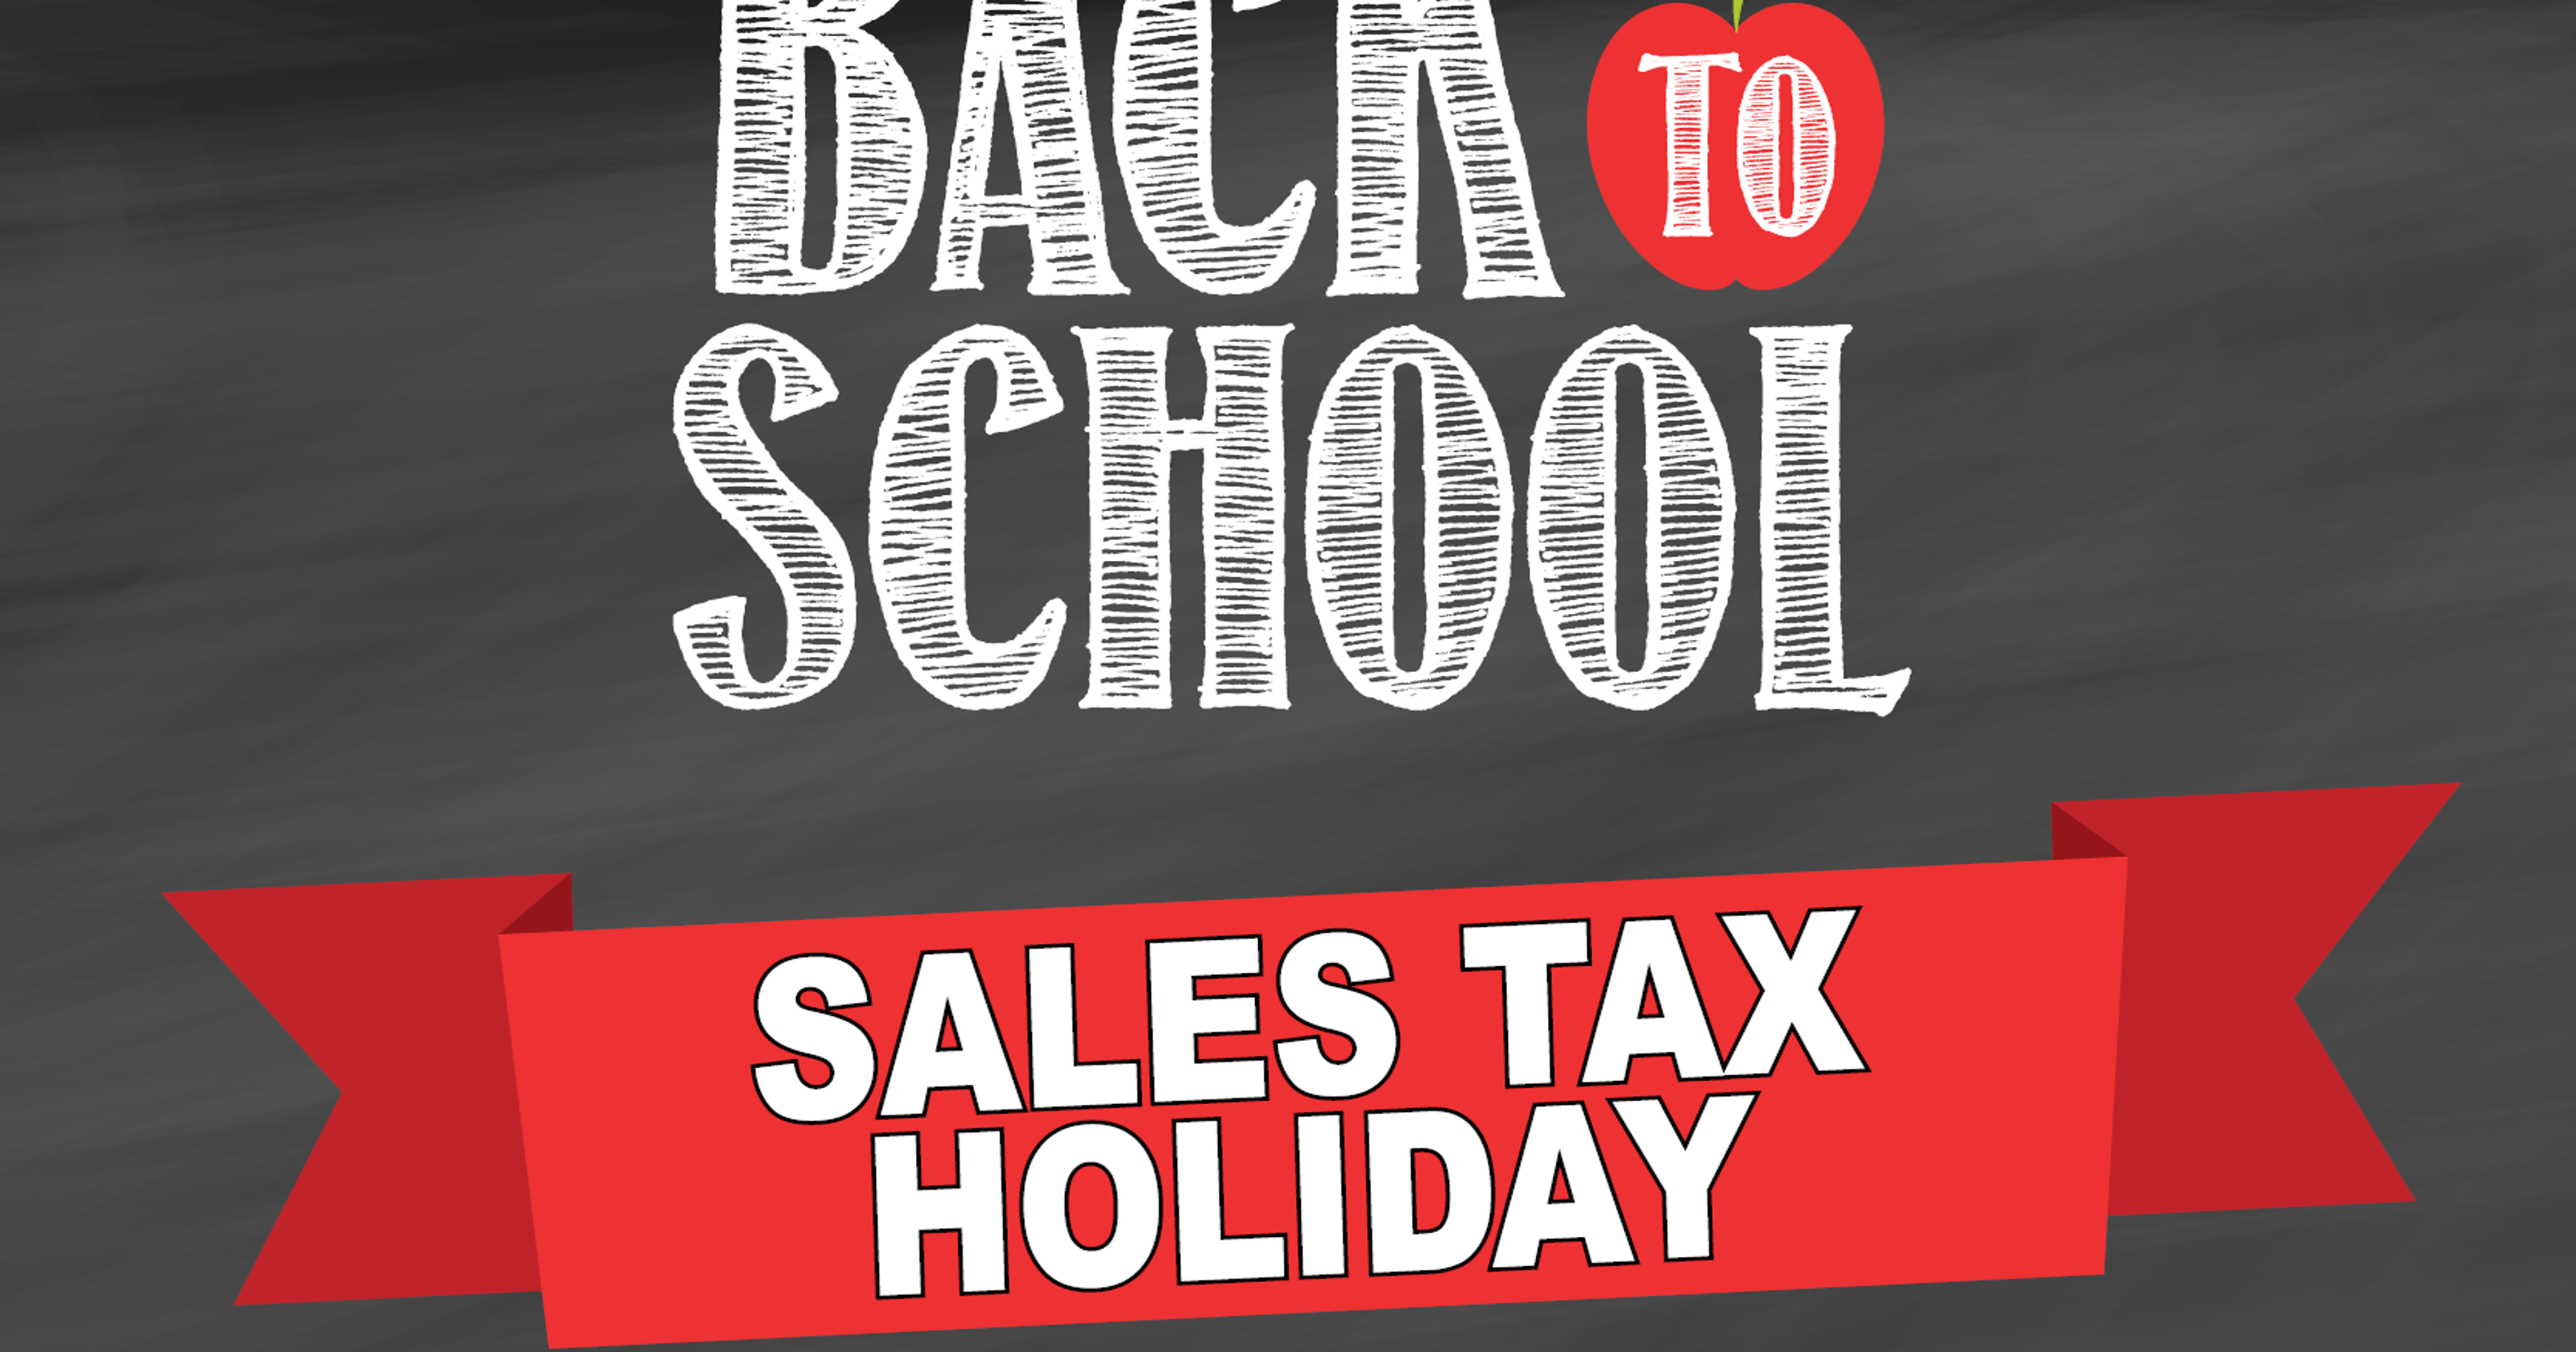 The 2018 BacktoSchool taxfree weekend will help you save big